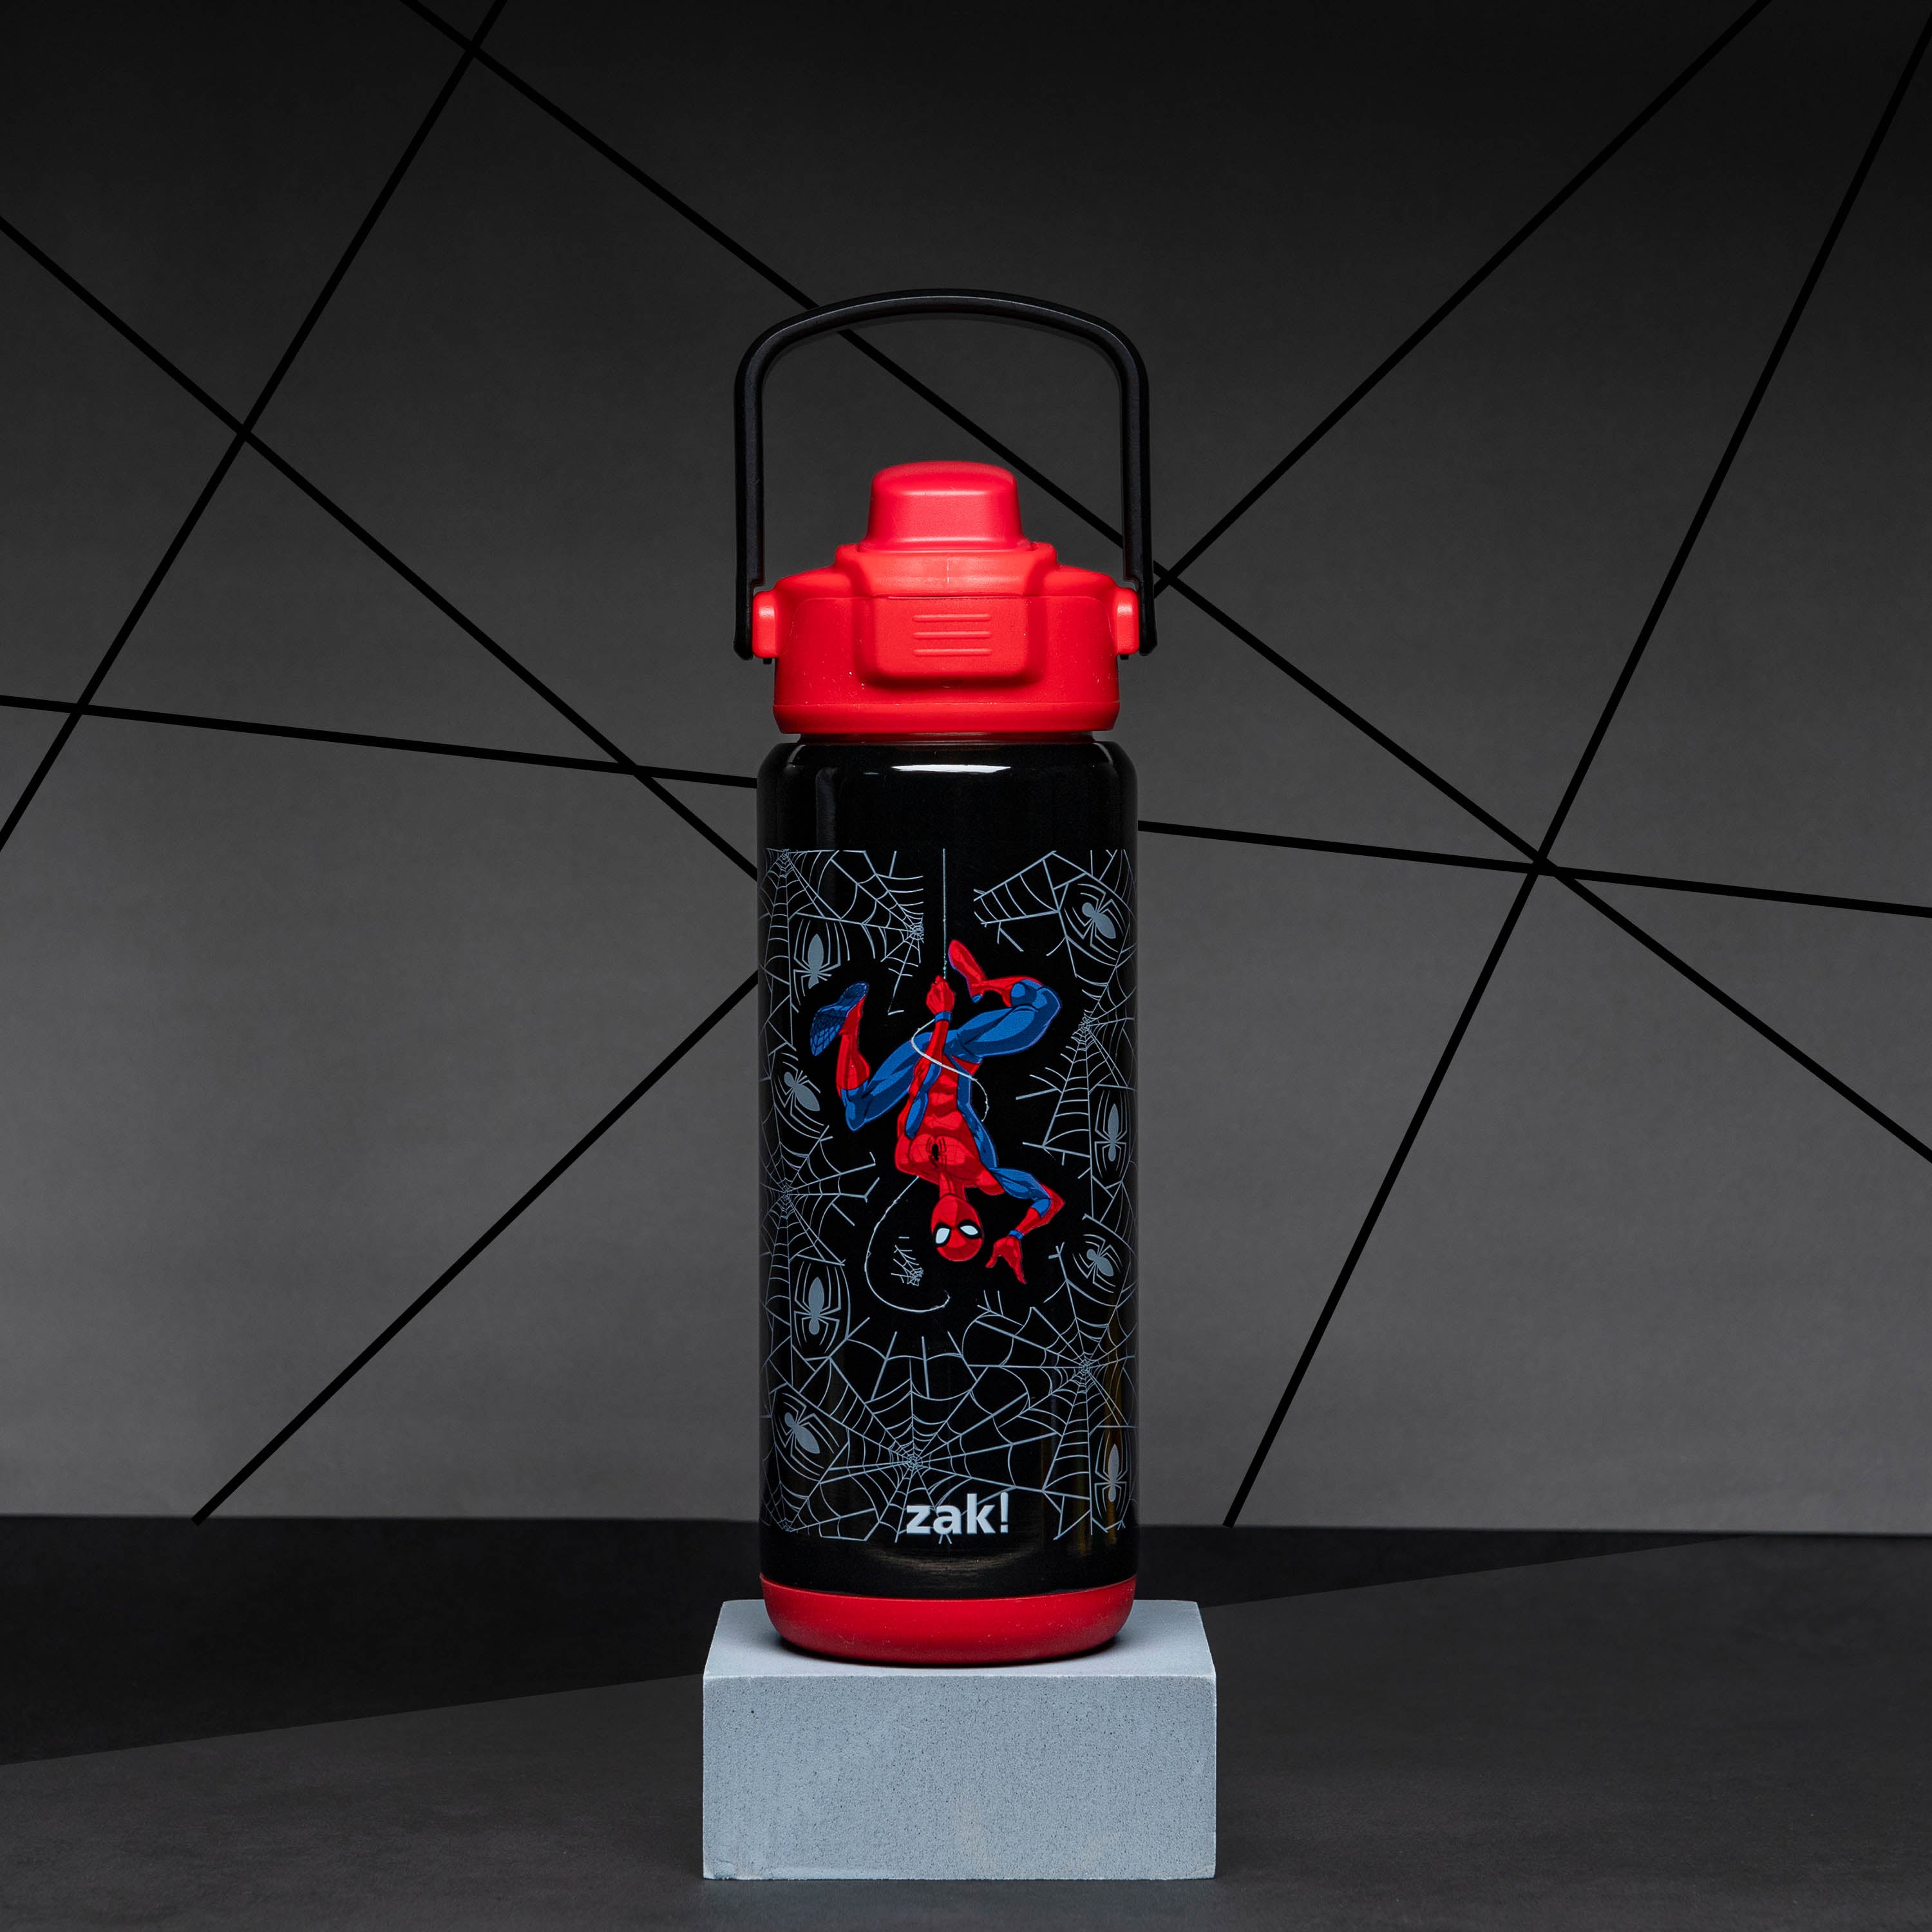 Amazing Spiderman Stainless Steel Water Bottle